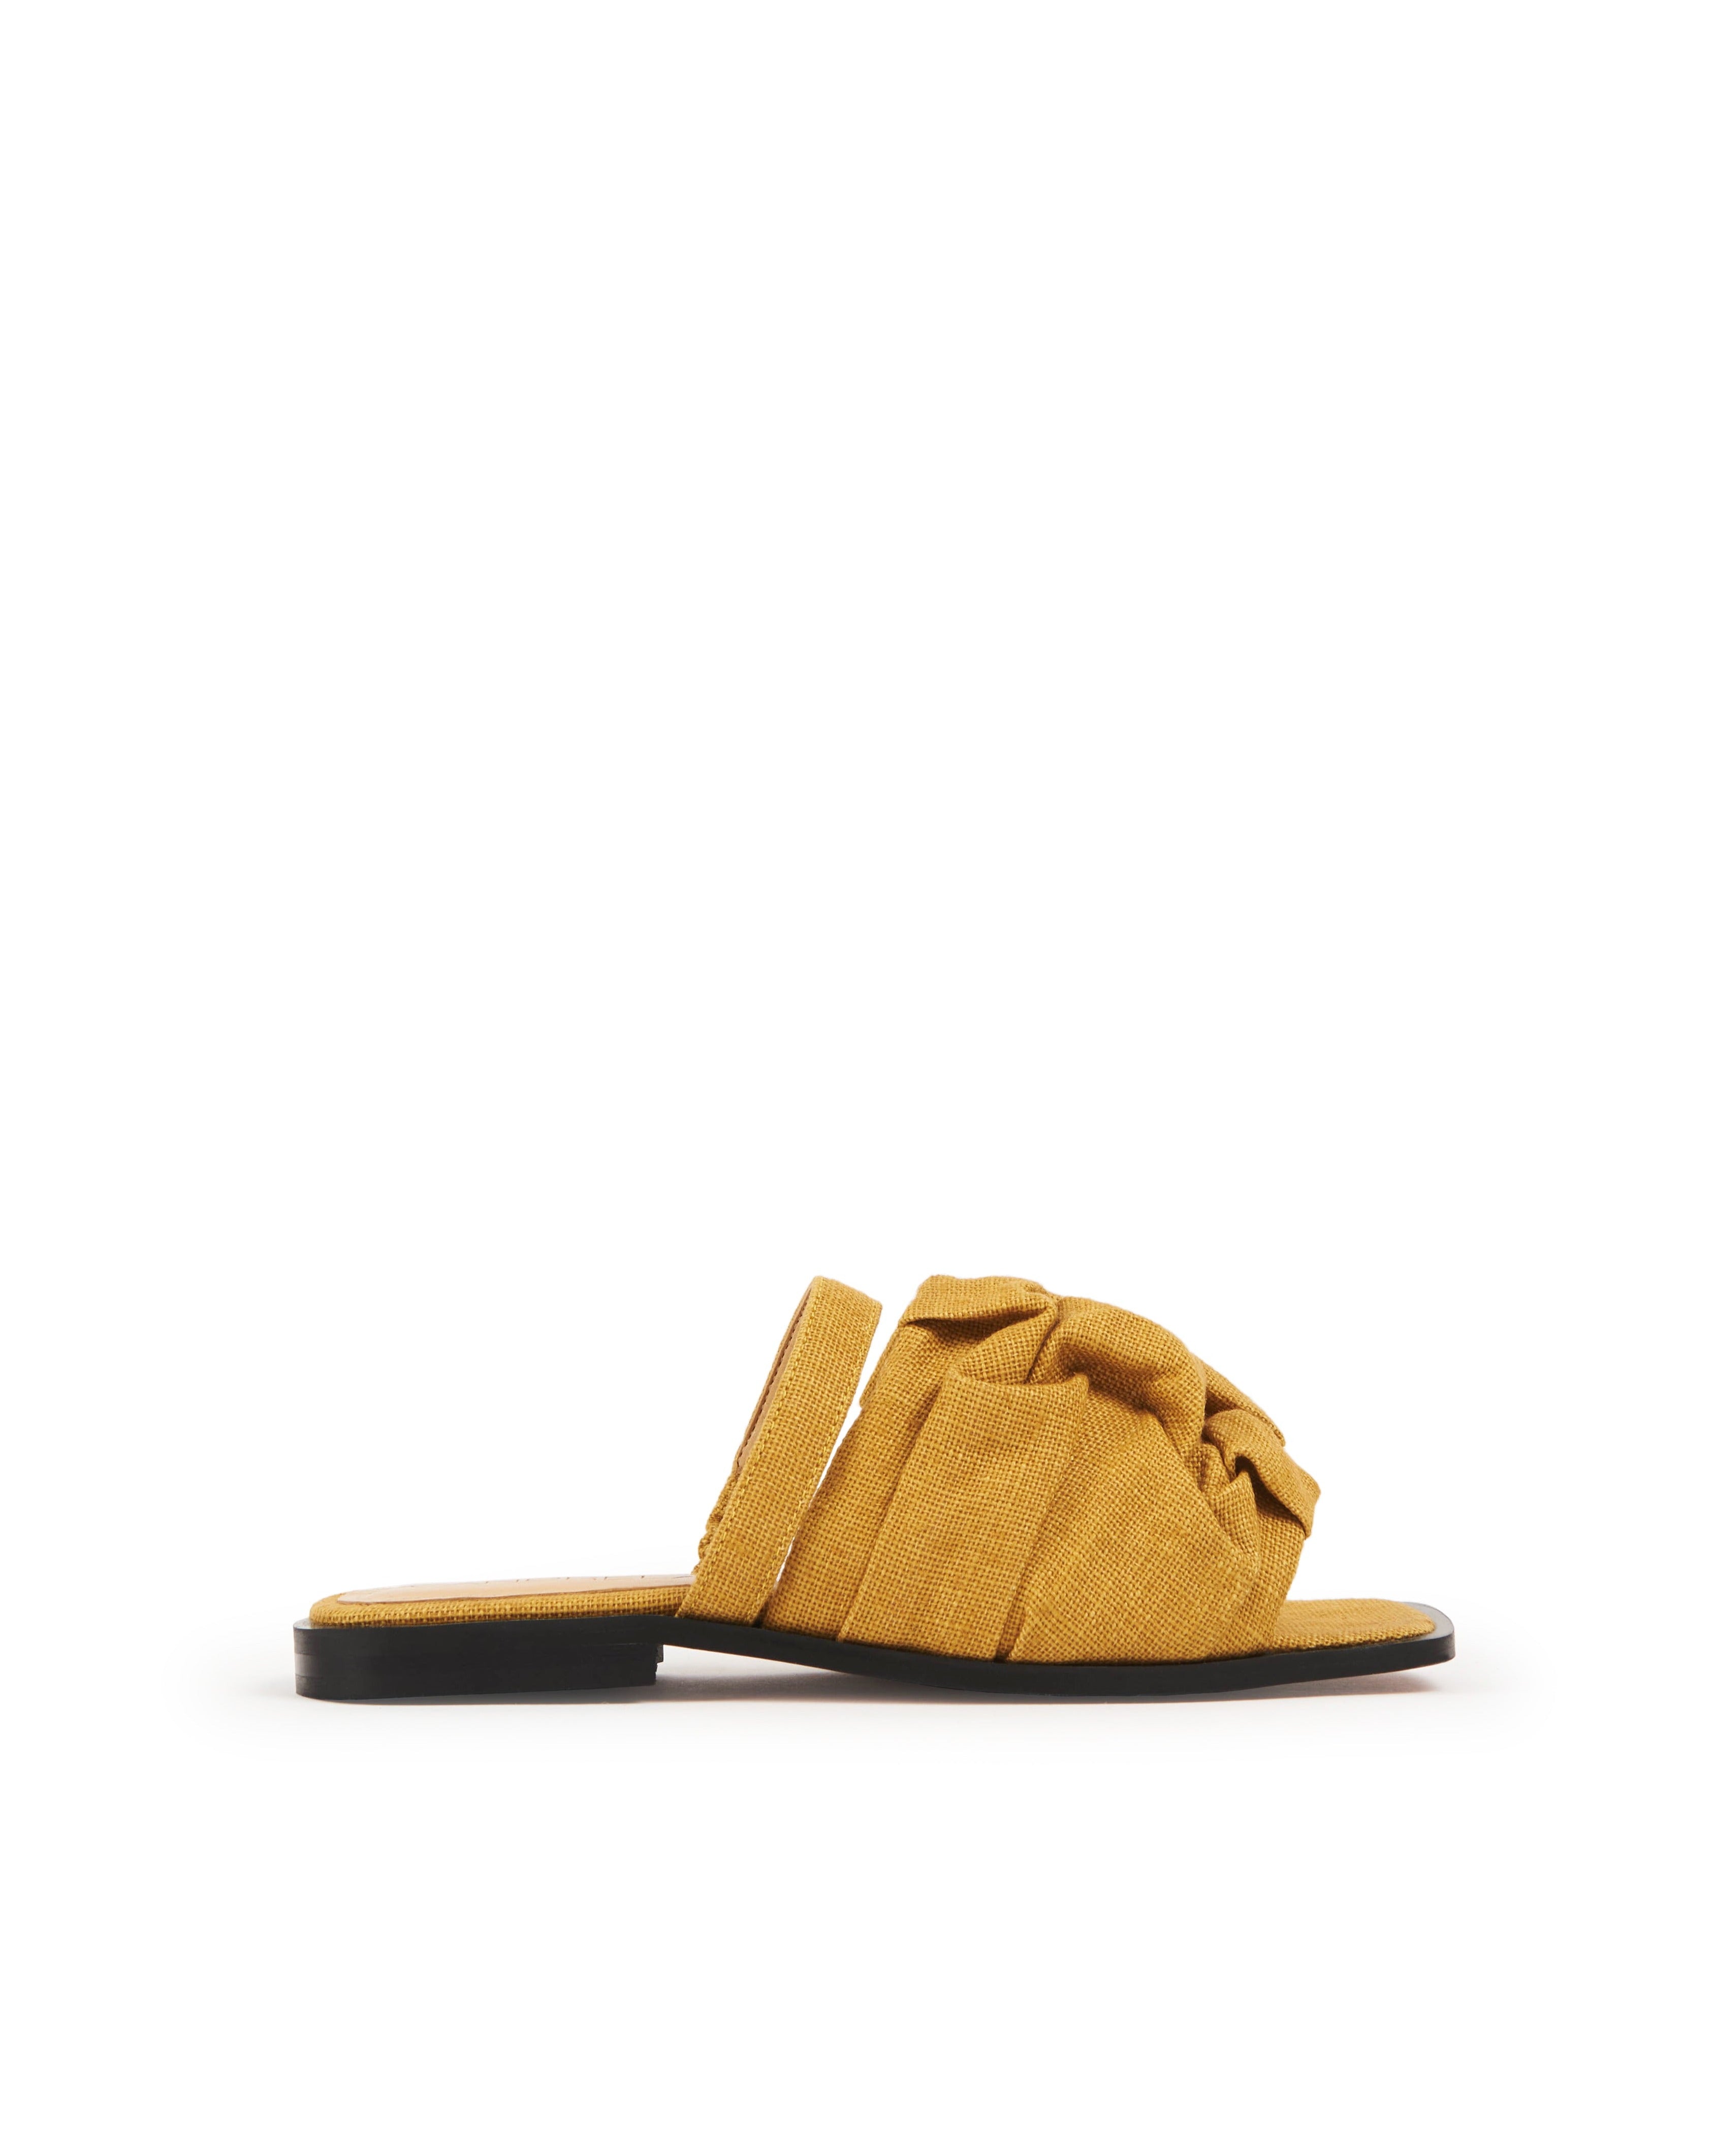 auprès | Varda Soleil - Yellow leather slide sandals